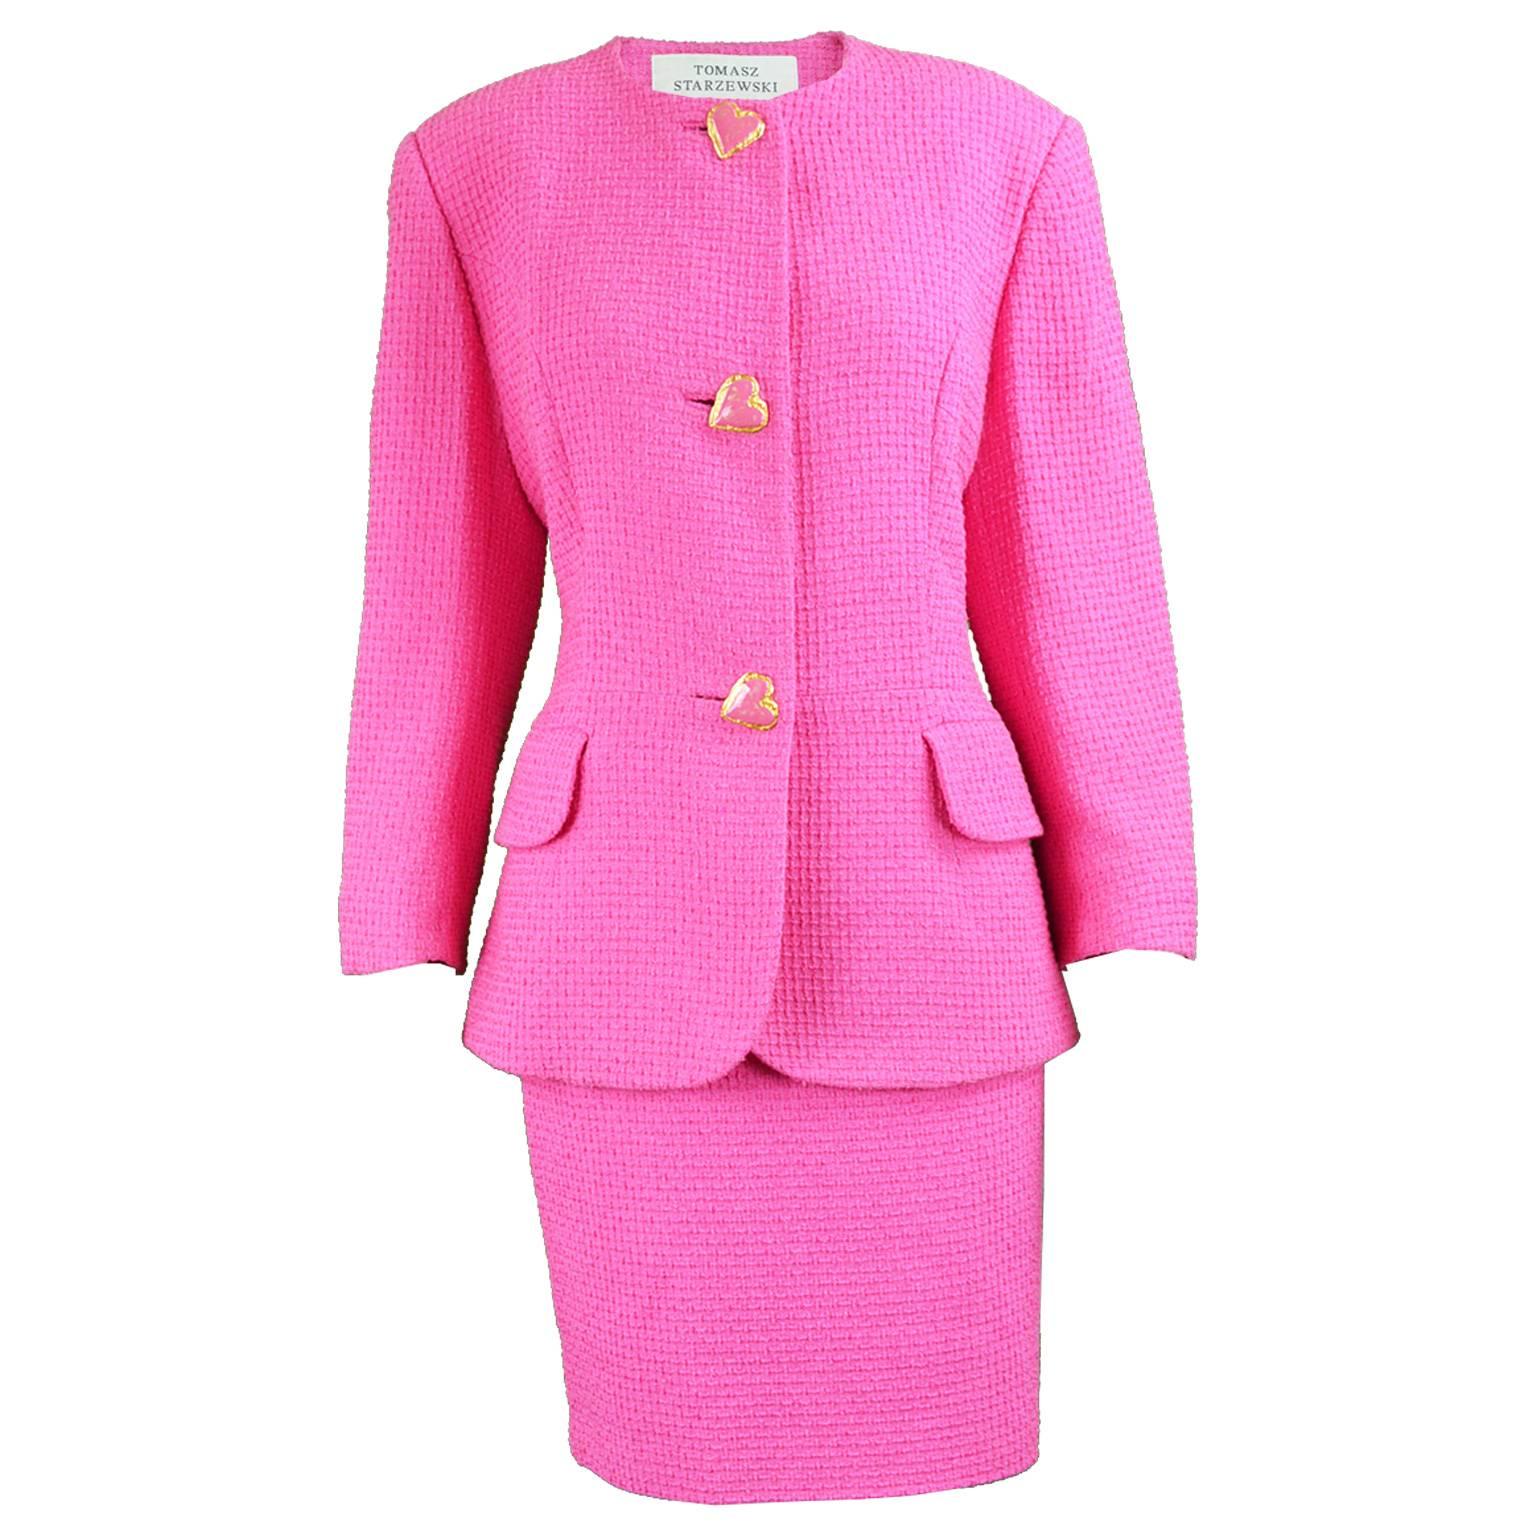 Tomasz Starzewski Pink Cotton Bouclé Skirt Suit with Love Heart Buttons, 1980s